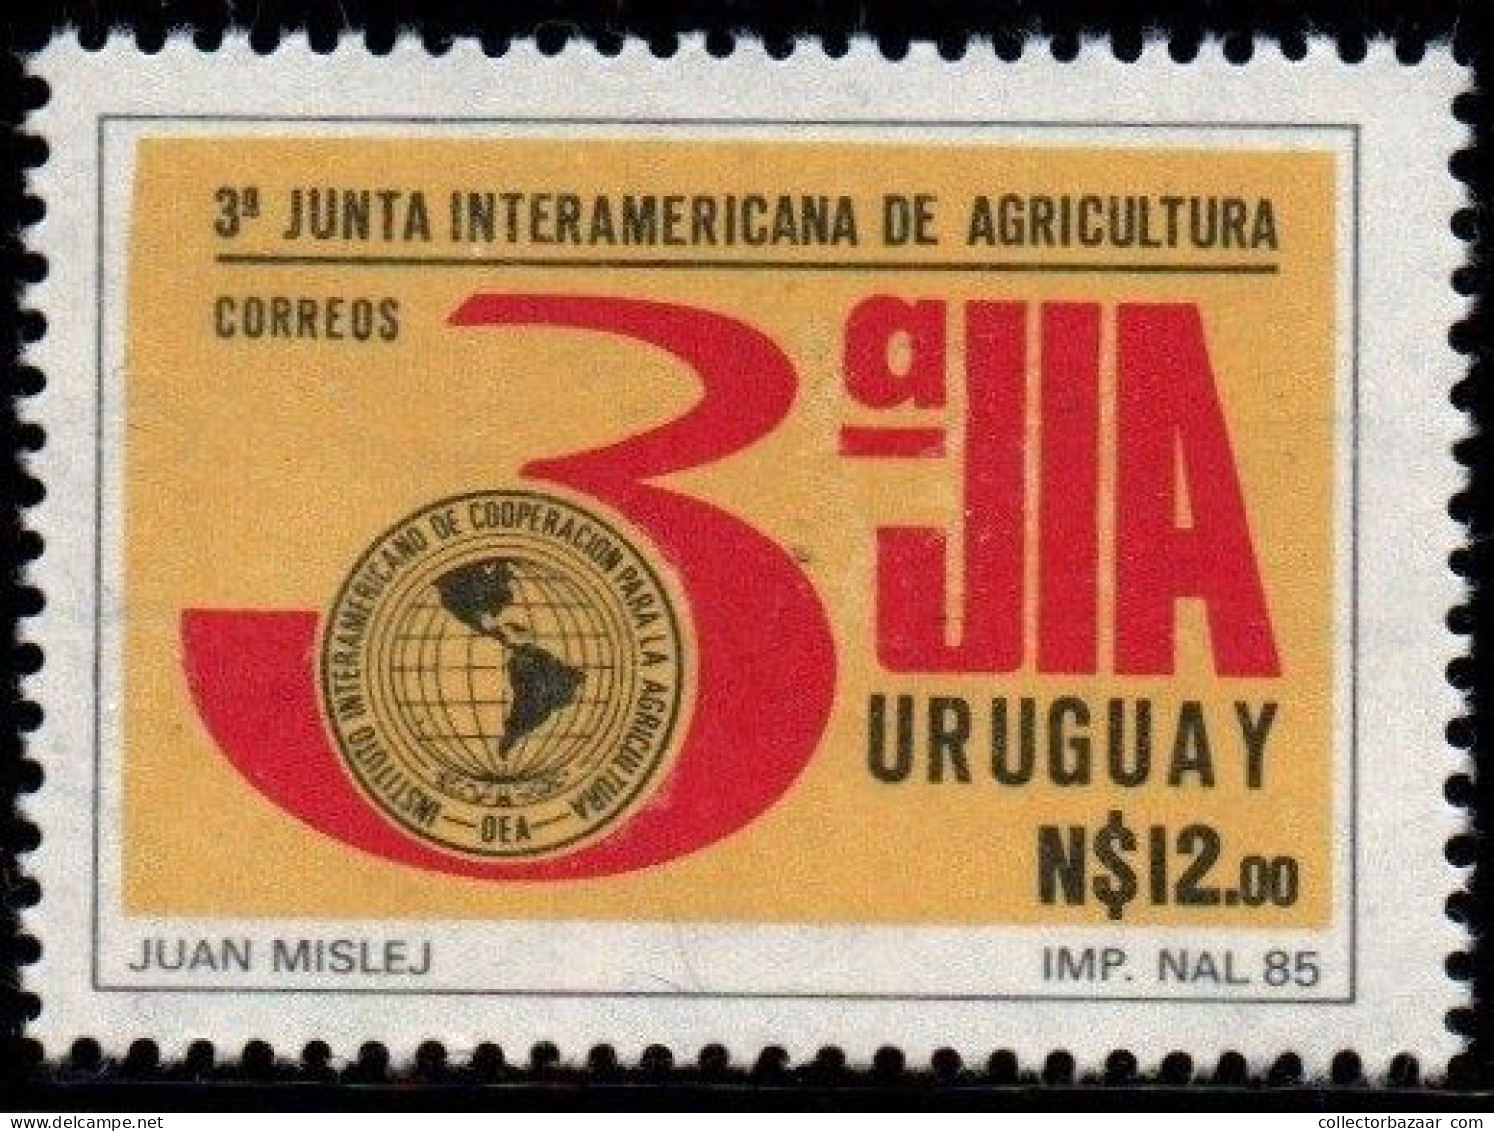 1986 Uruguay 3rd Inter American Agricultural Congress #1186 ** MNH - Uruguay